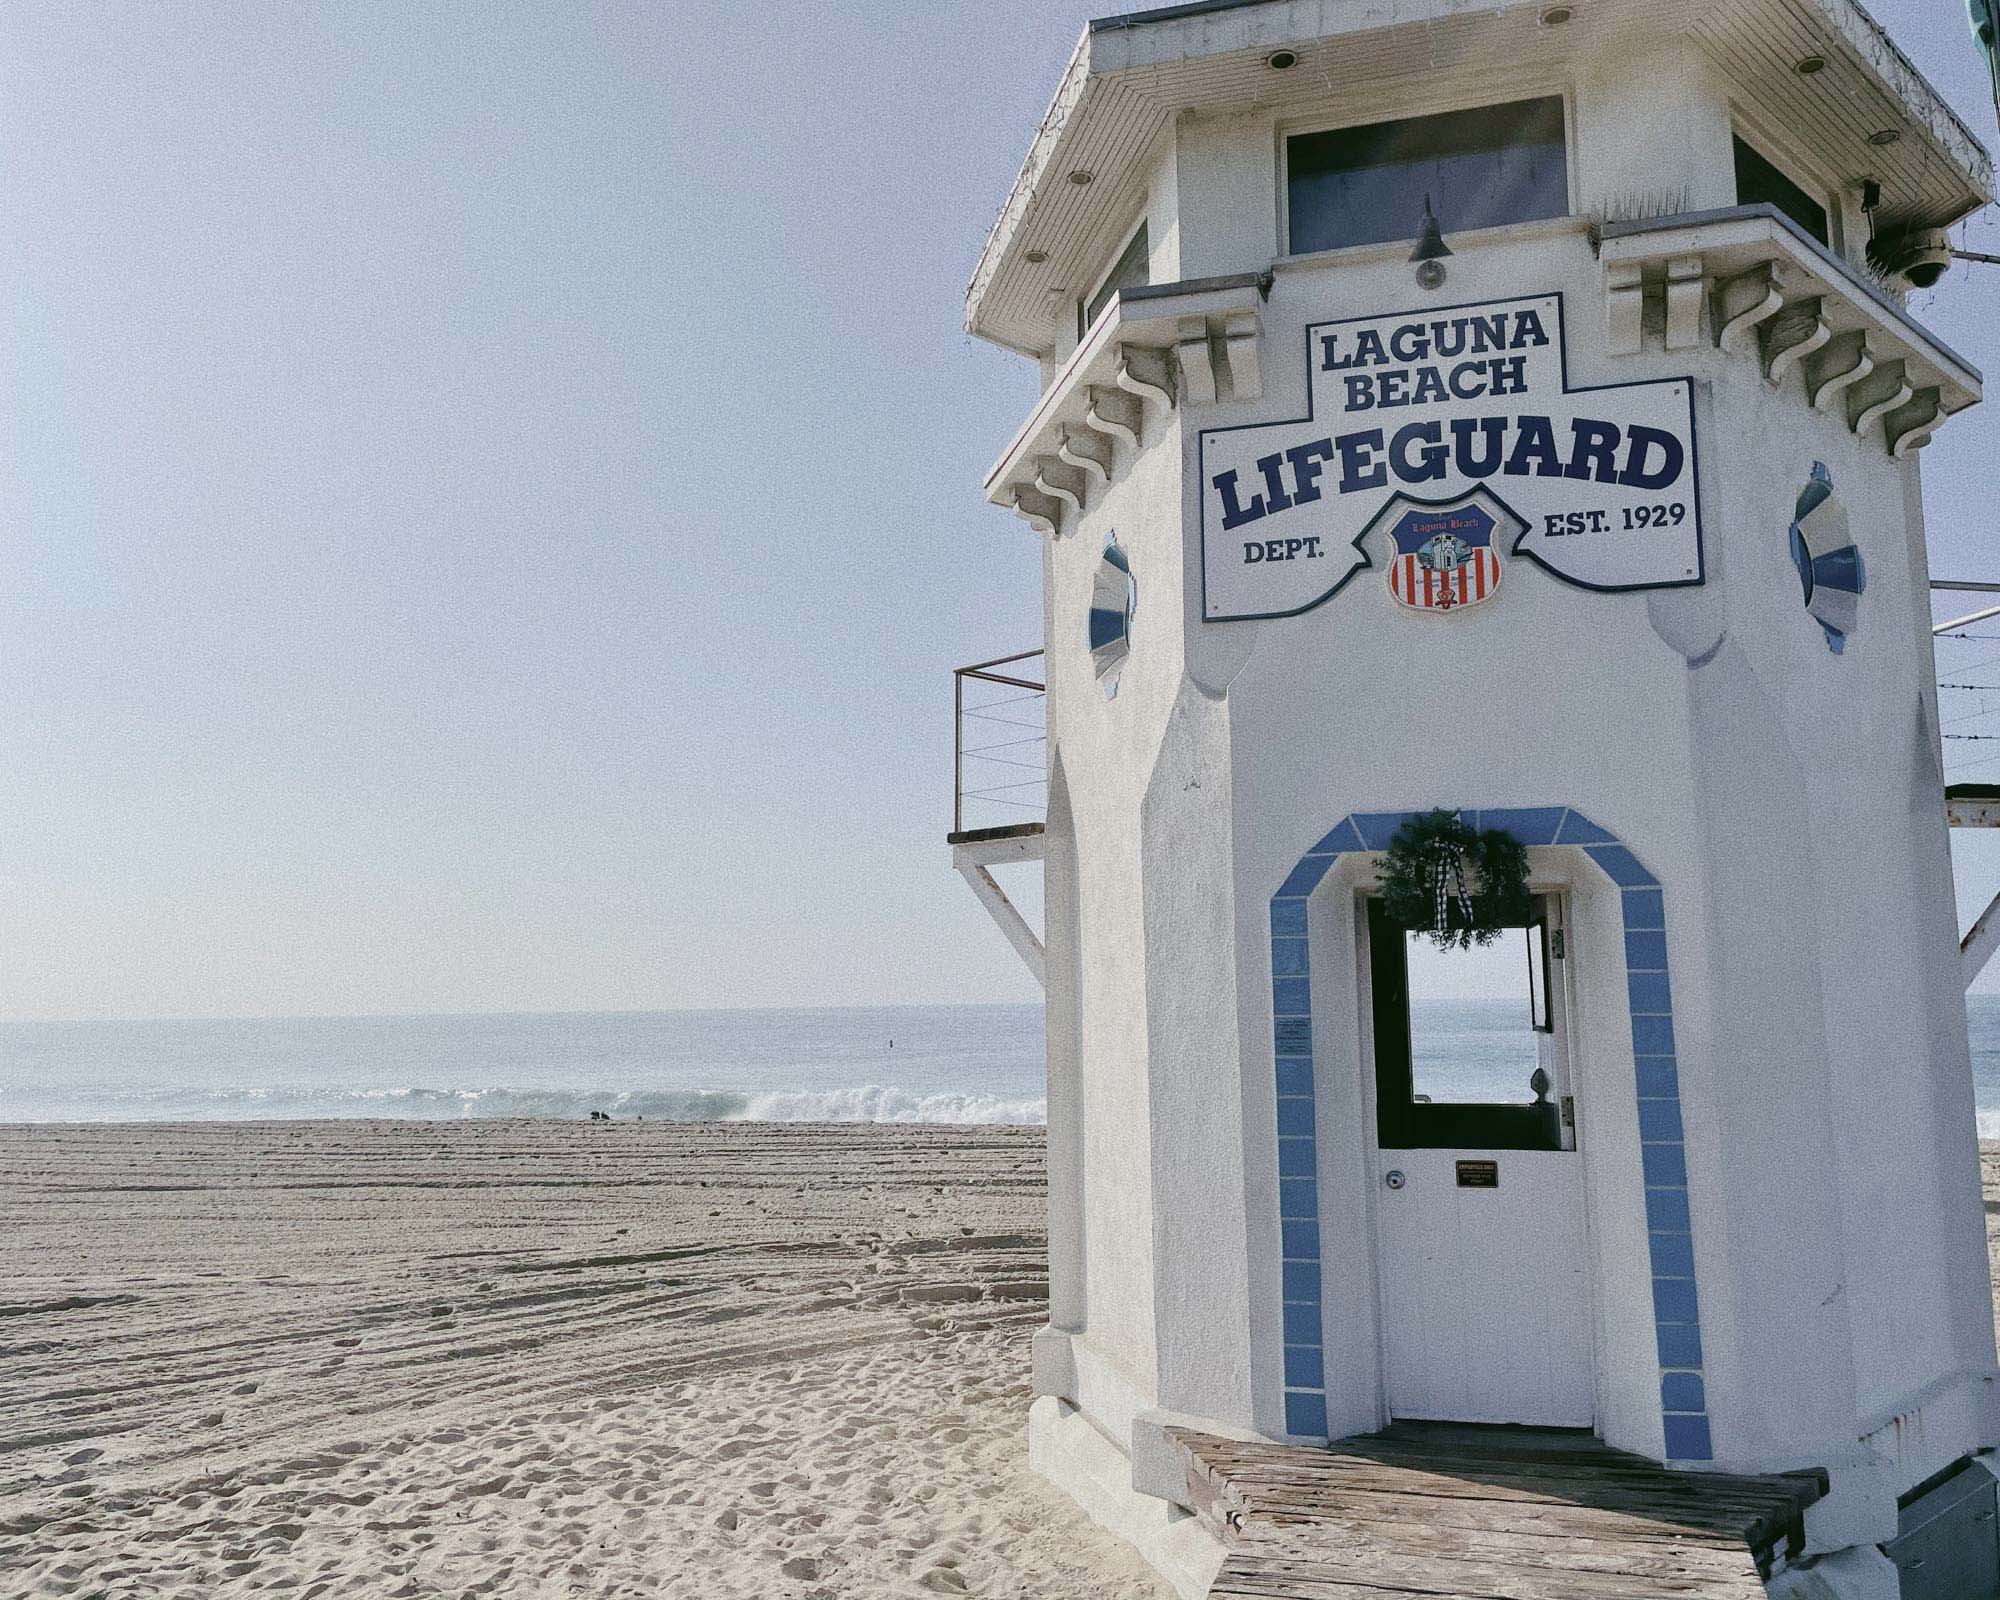 Iconic Lifeguard Station at Main Beach